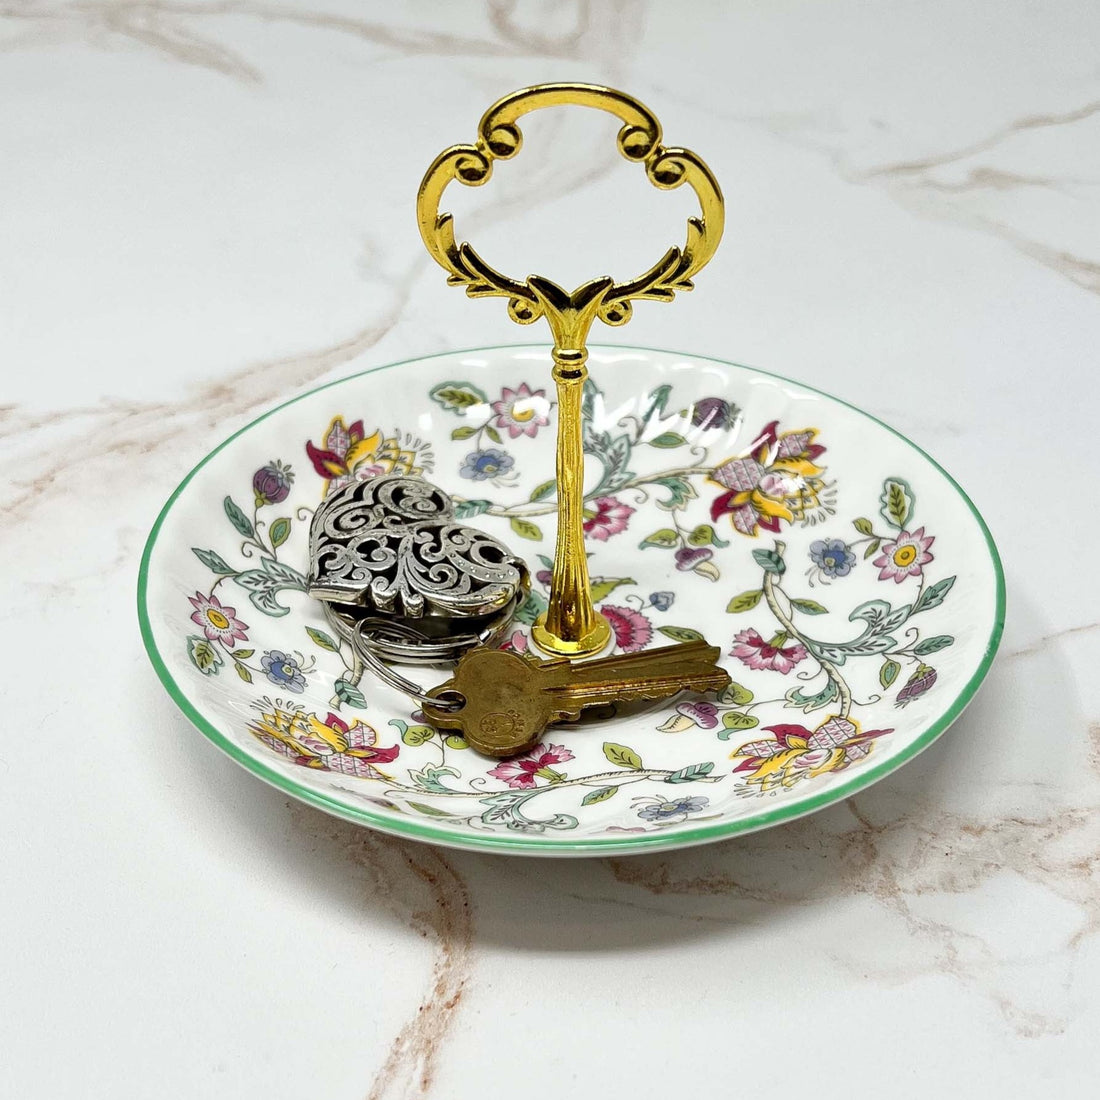 Jane Jewelry Dish | The Brooklyn Teacup - The Brooklyn Teacup